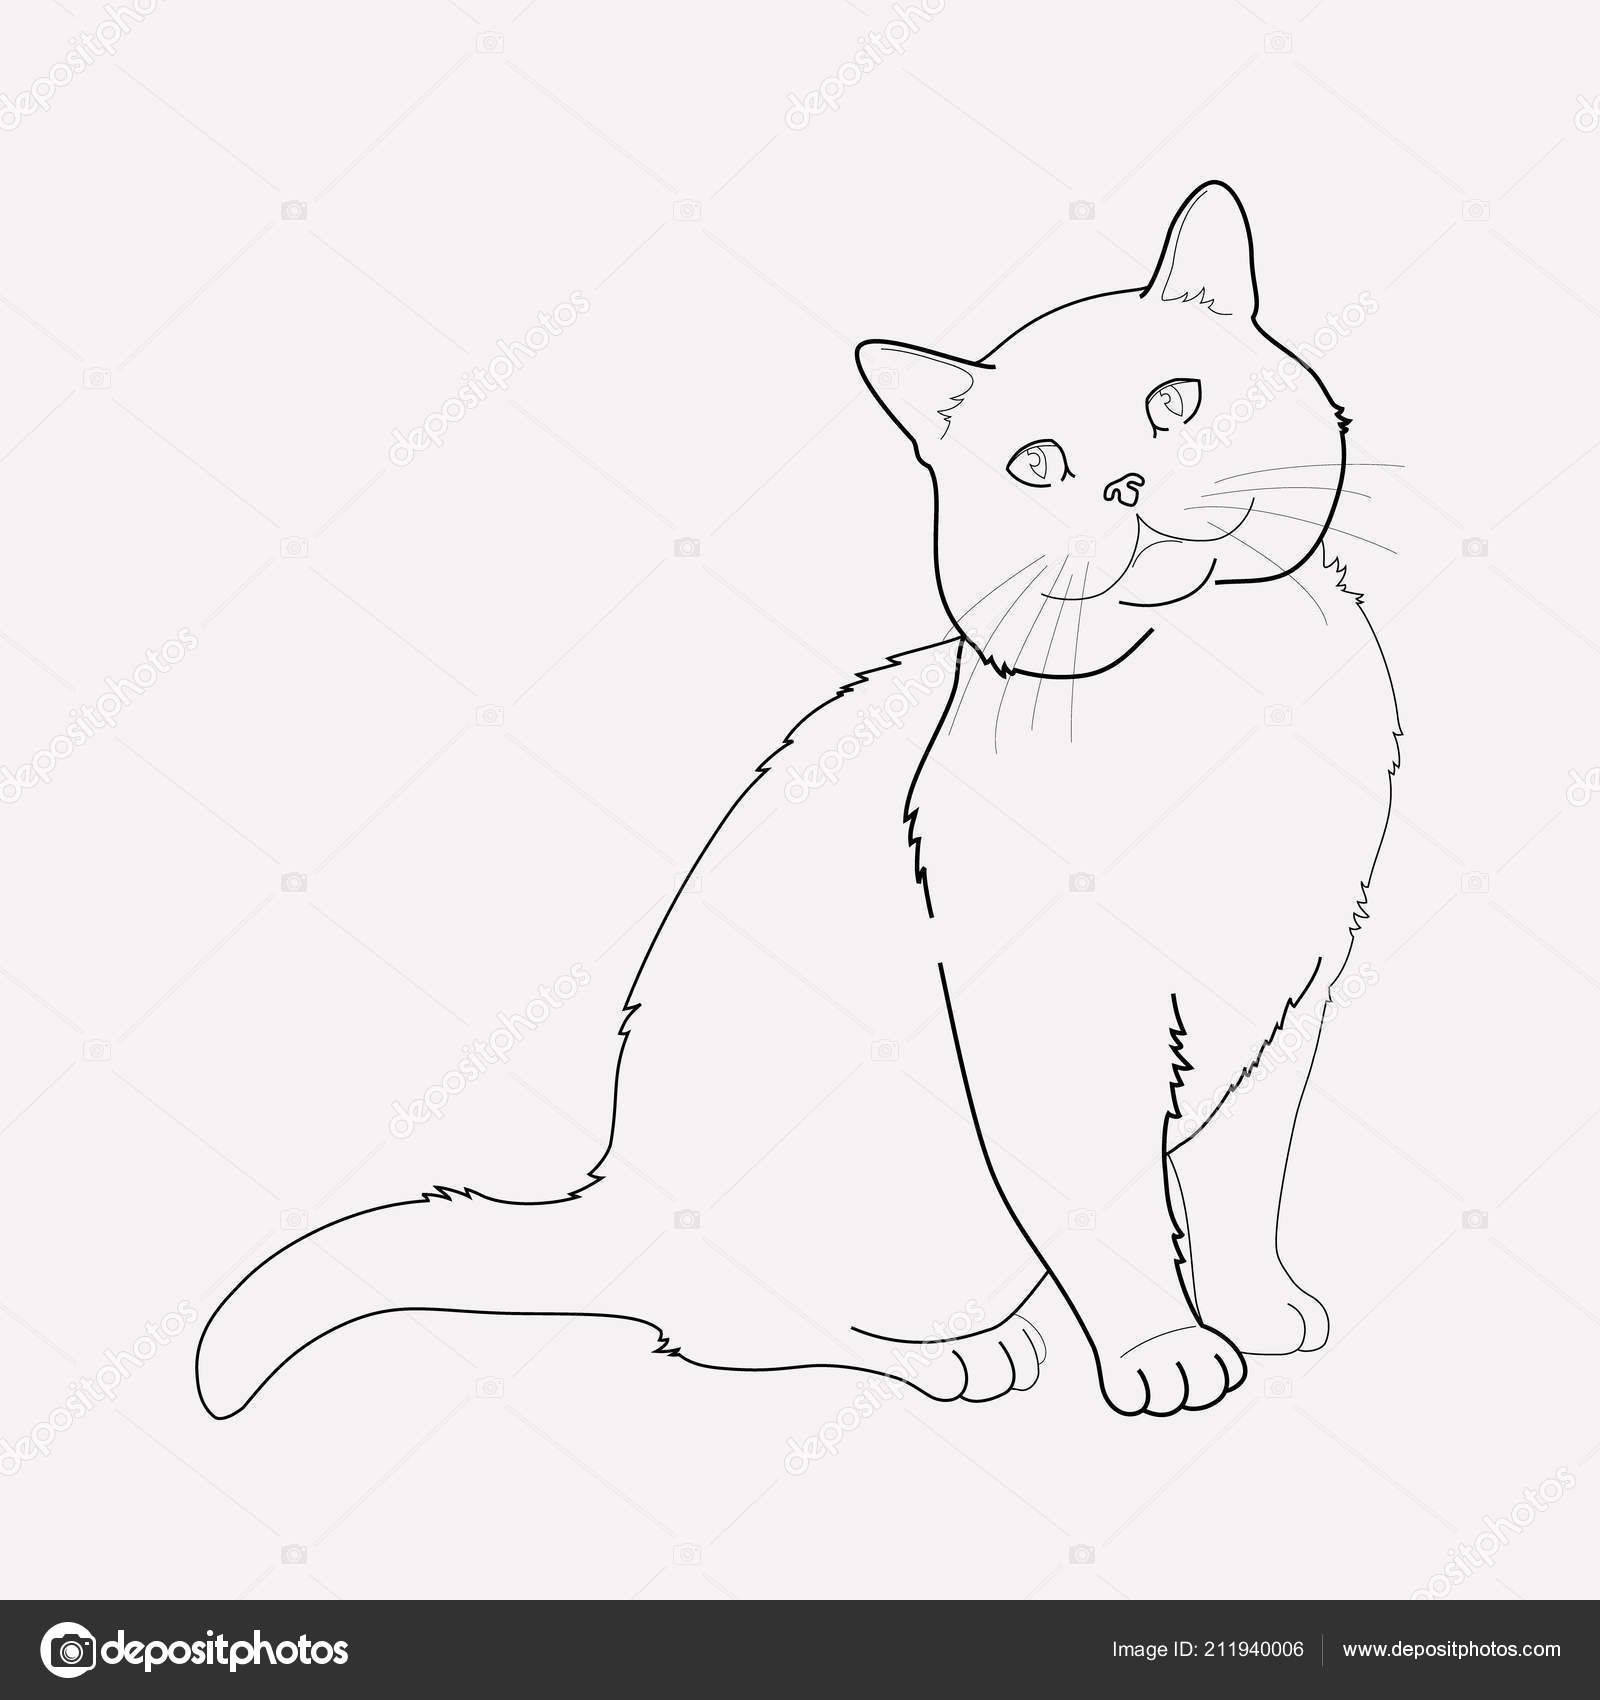 Black isolated design cat, icon vector. Illustration background